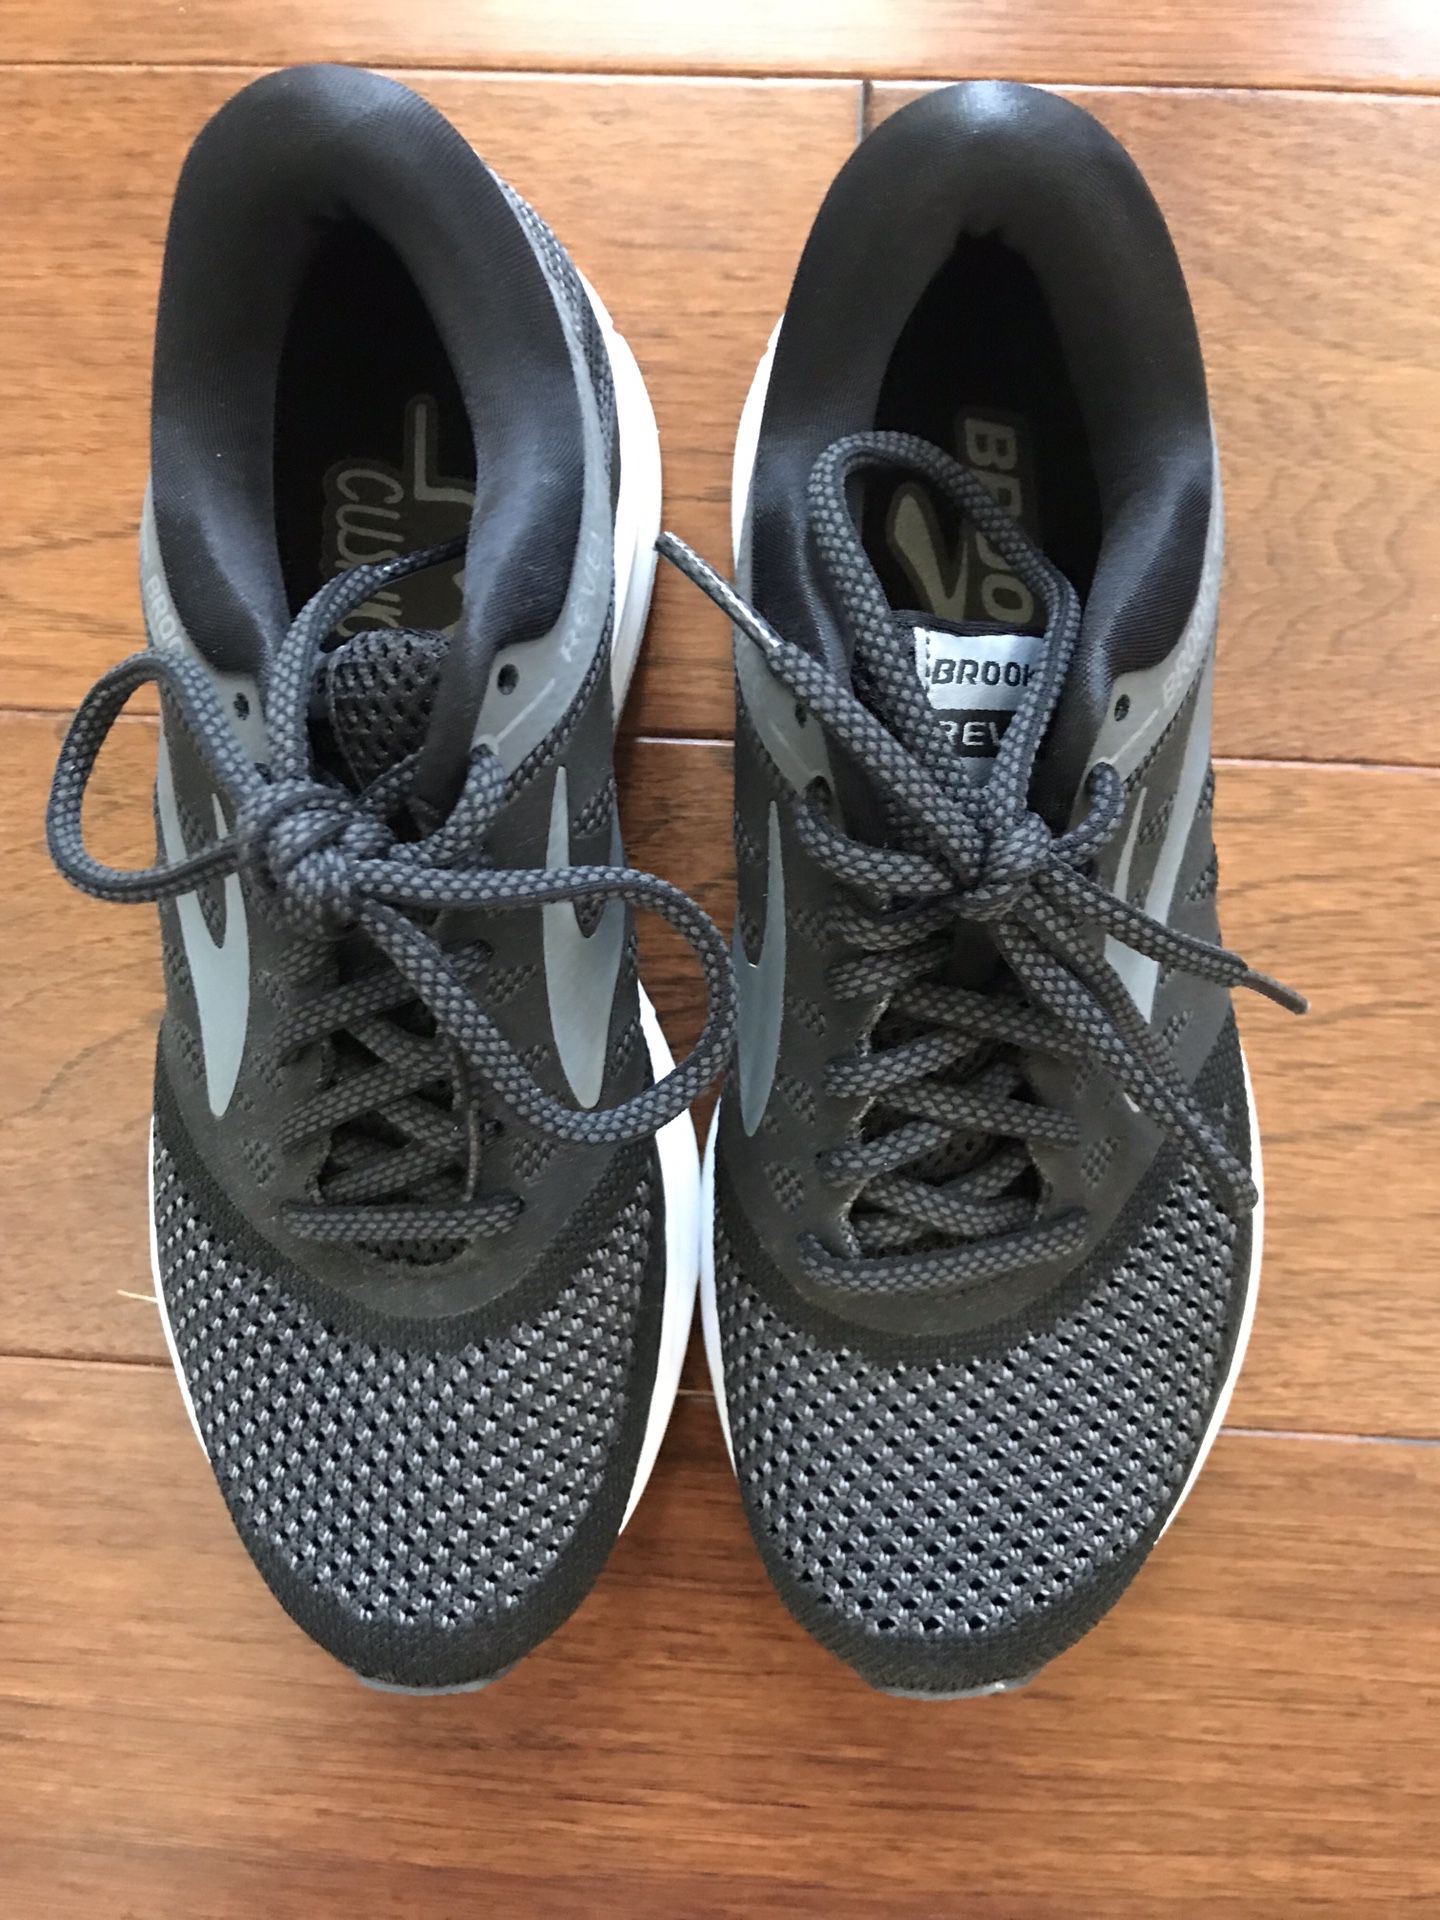 Women’s running shoes - Brooks Revel size 6M black